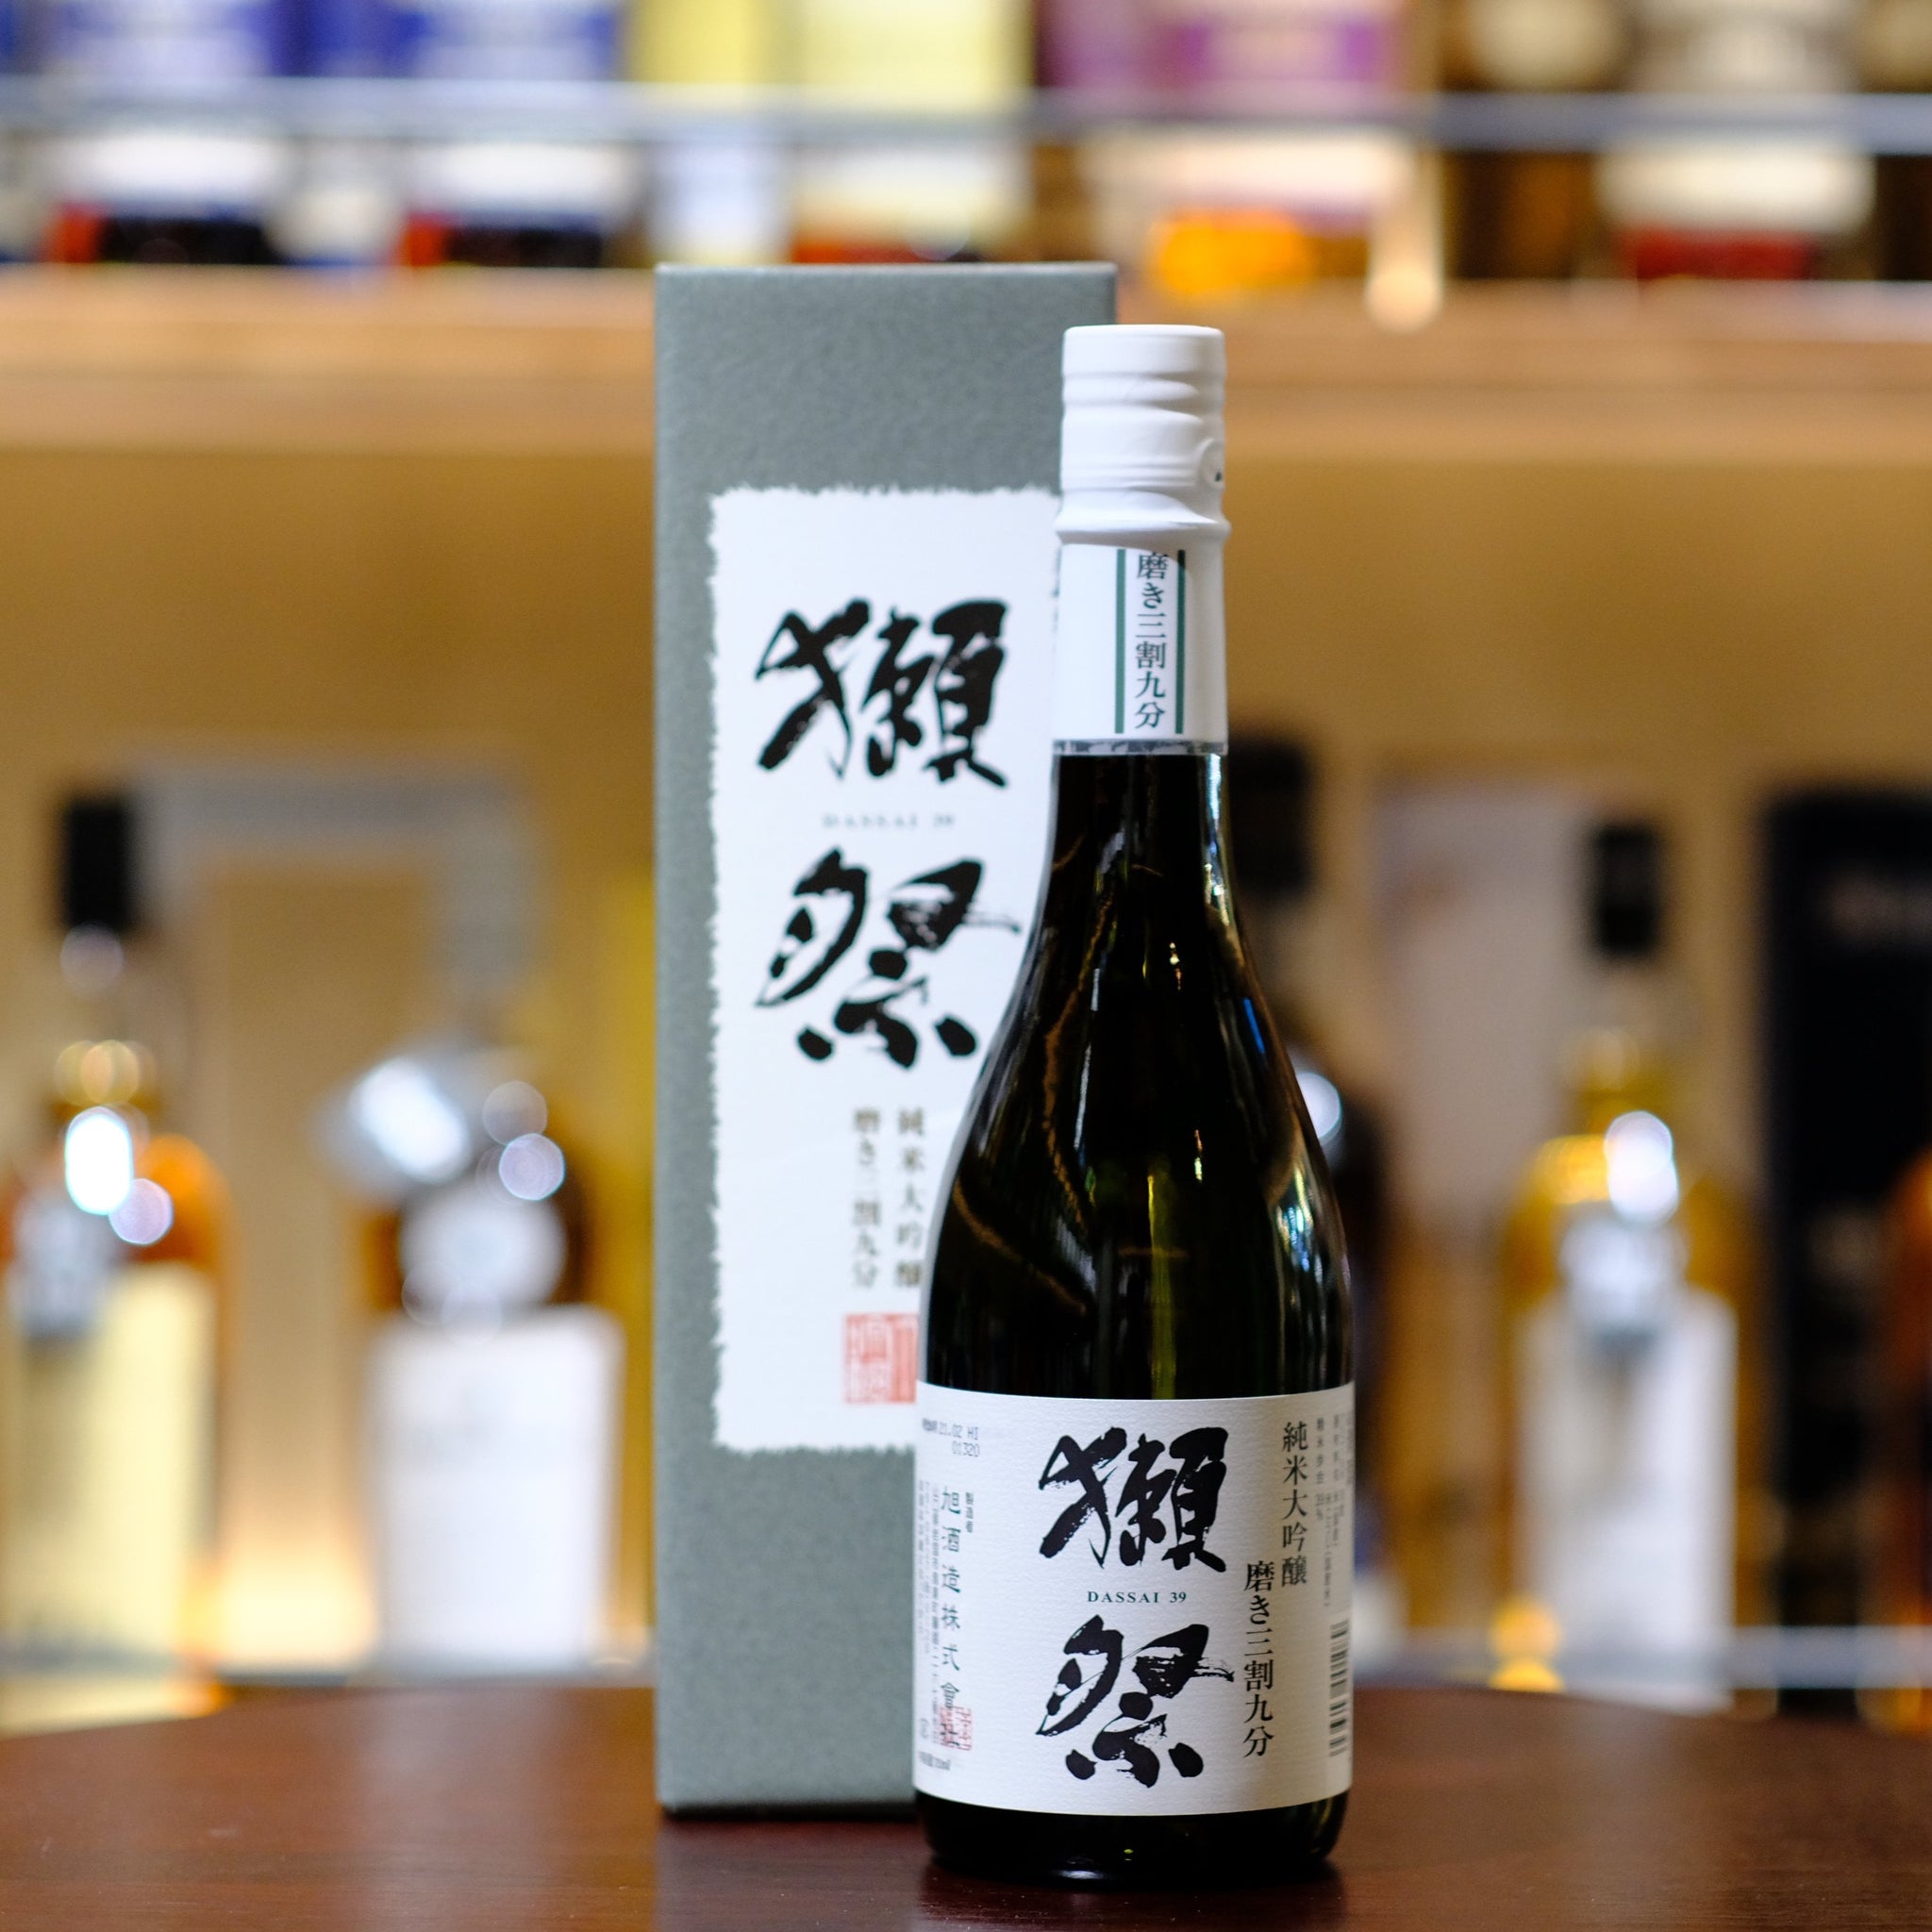 Dassai 39 Junmai Daiginjo Japanese Sake 獺祭三割九分純米大吟釀